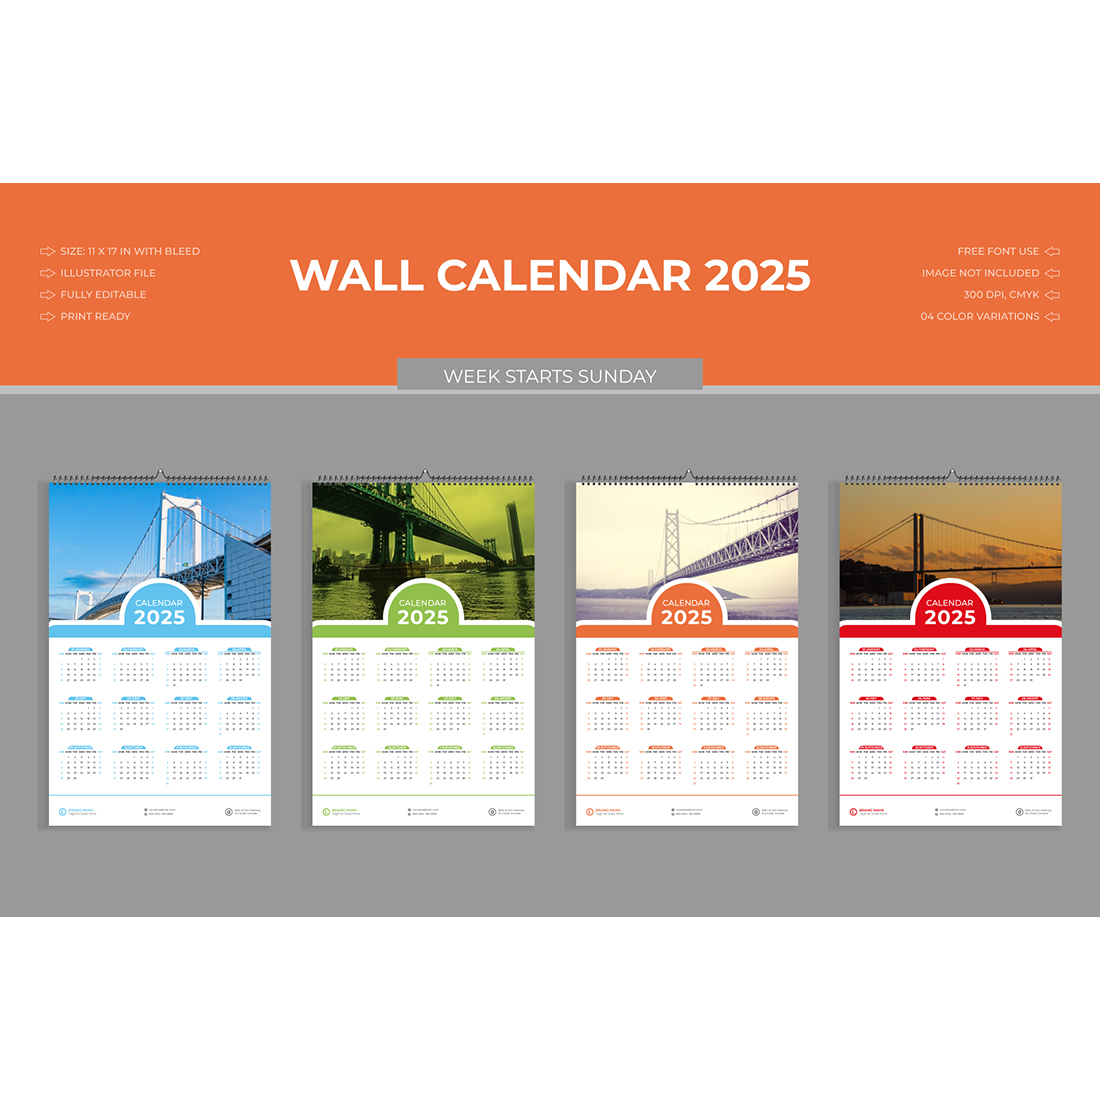 Wall Calendar 2025 preview image.